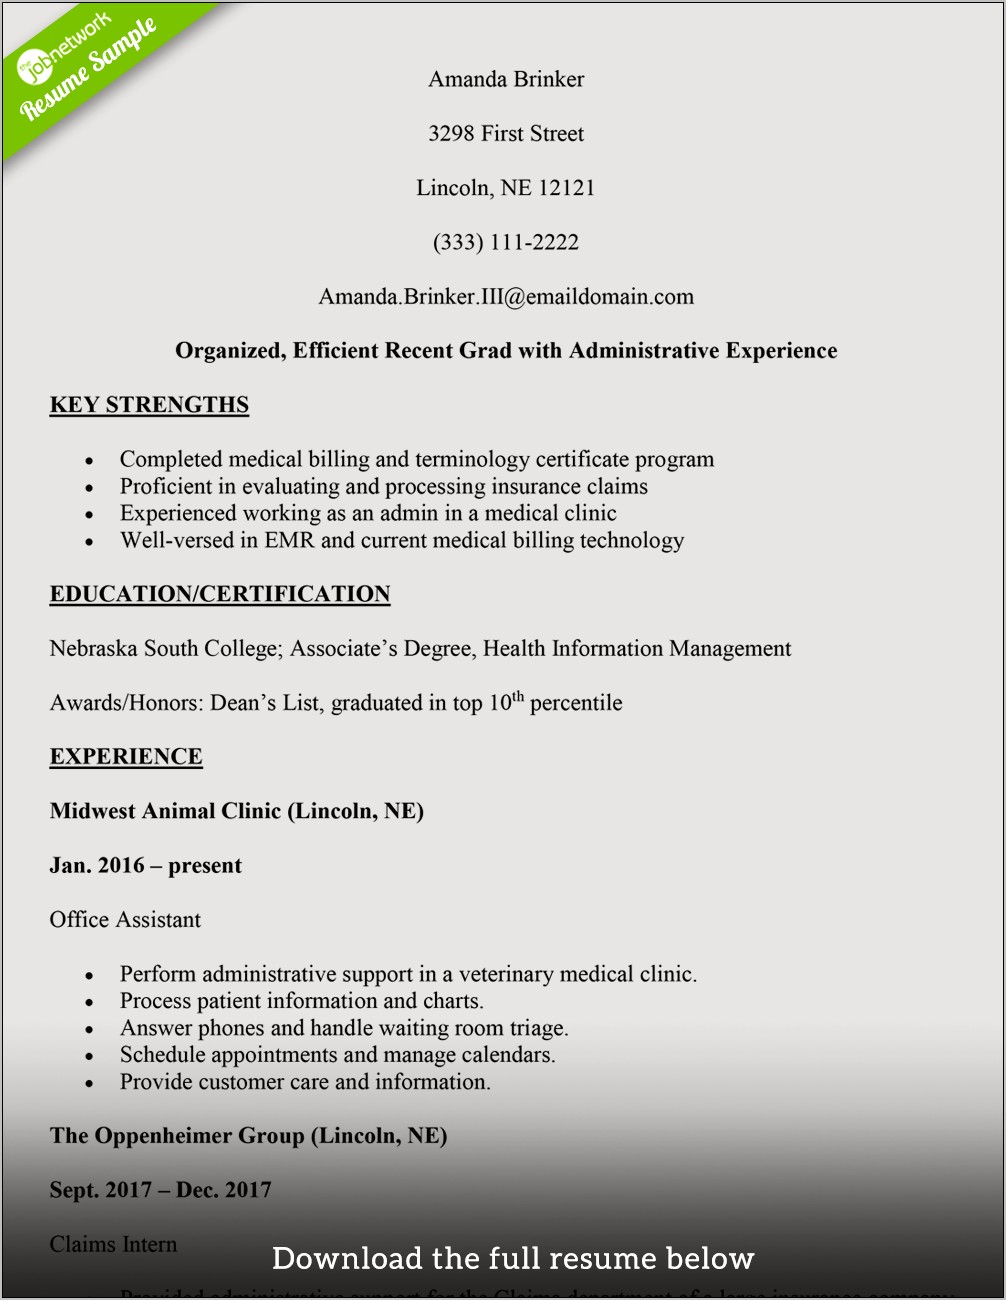 Medical Claim Specialist Job Description Resume